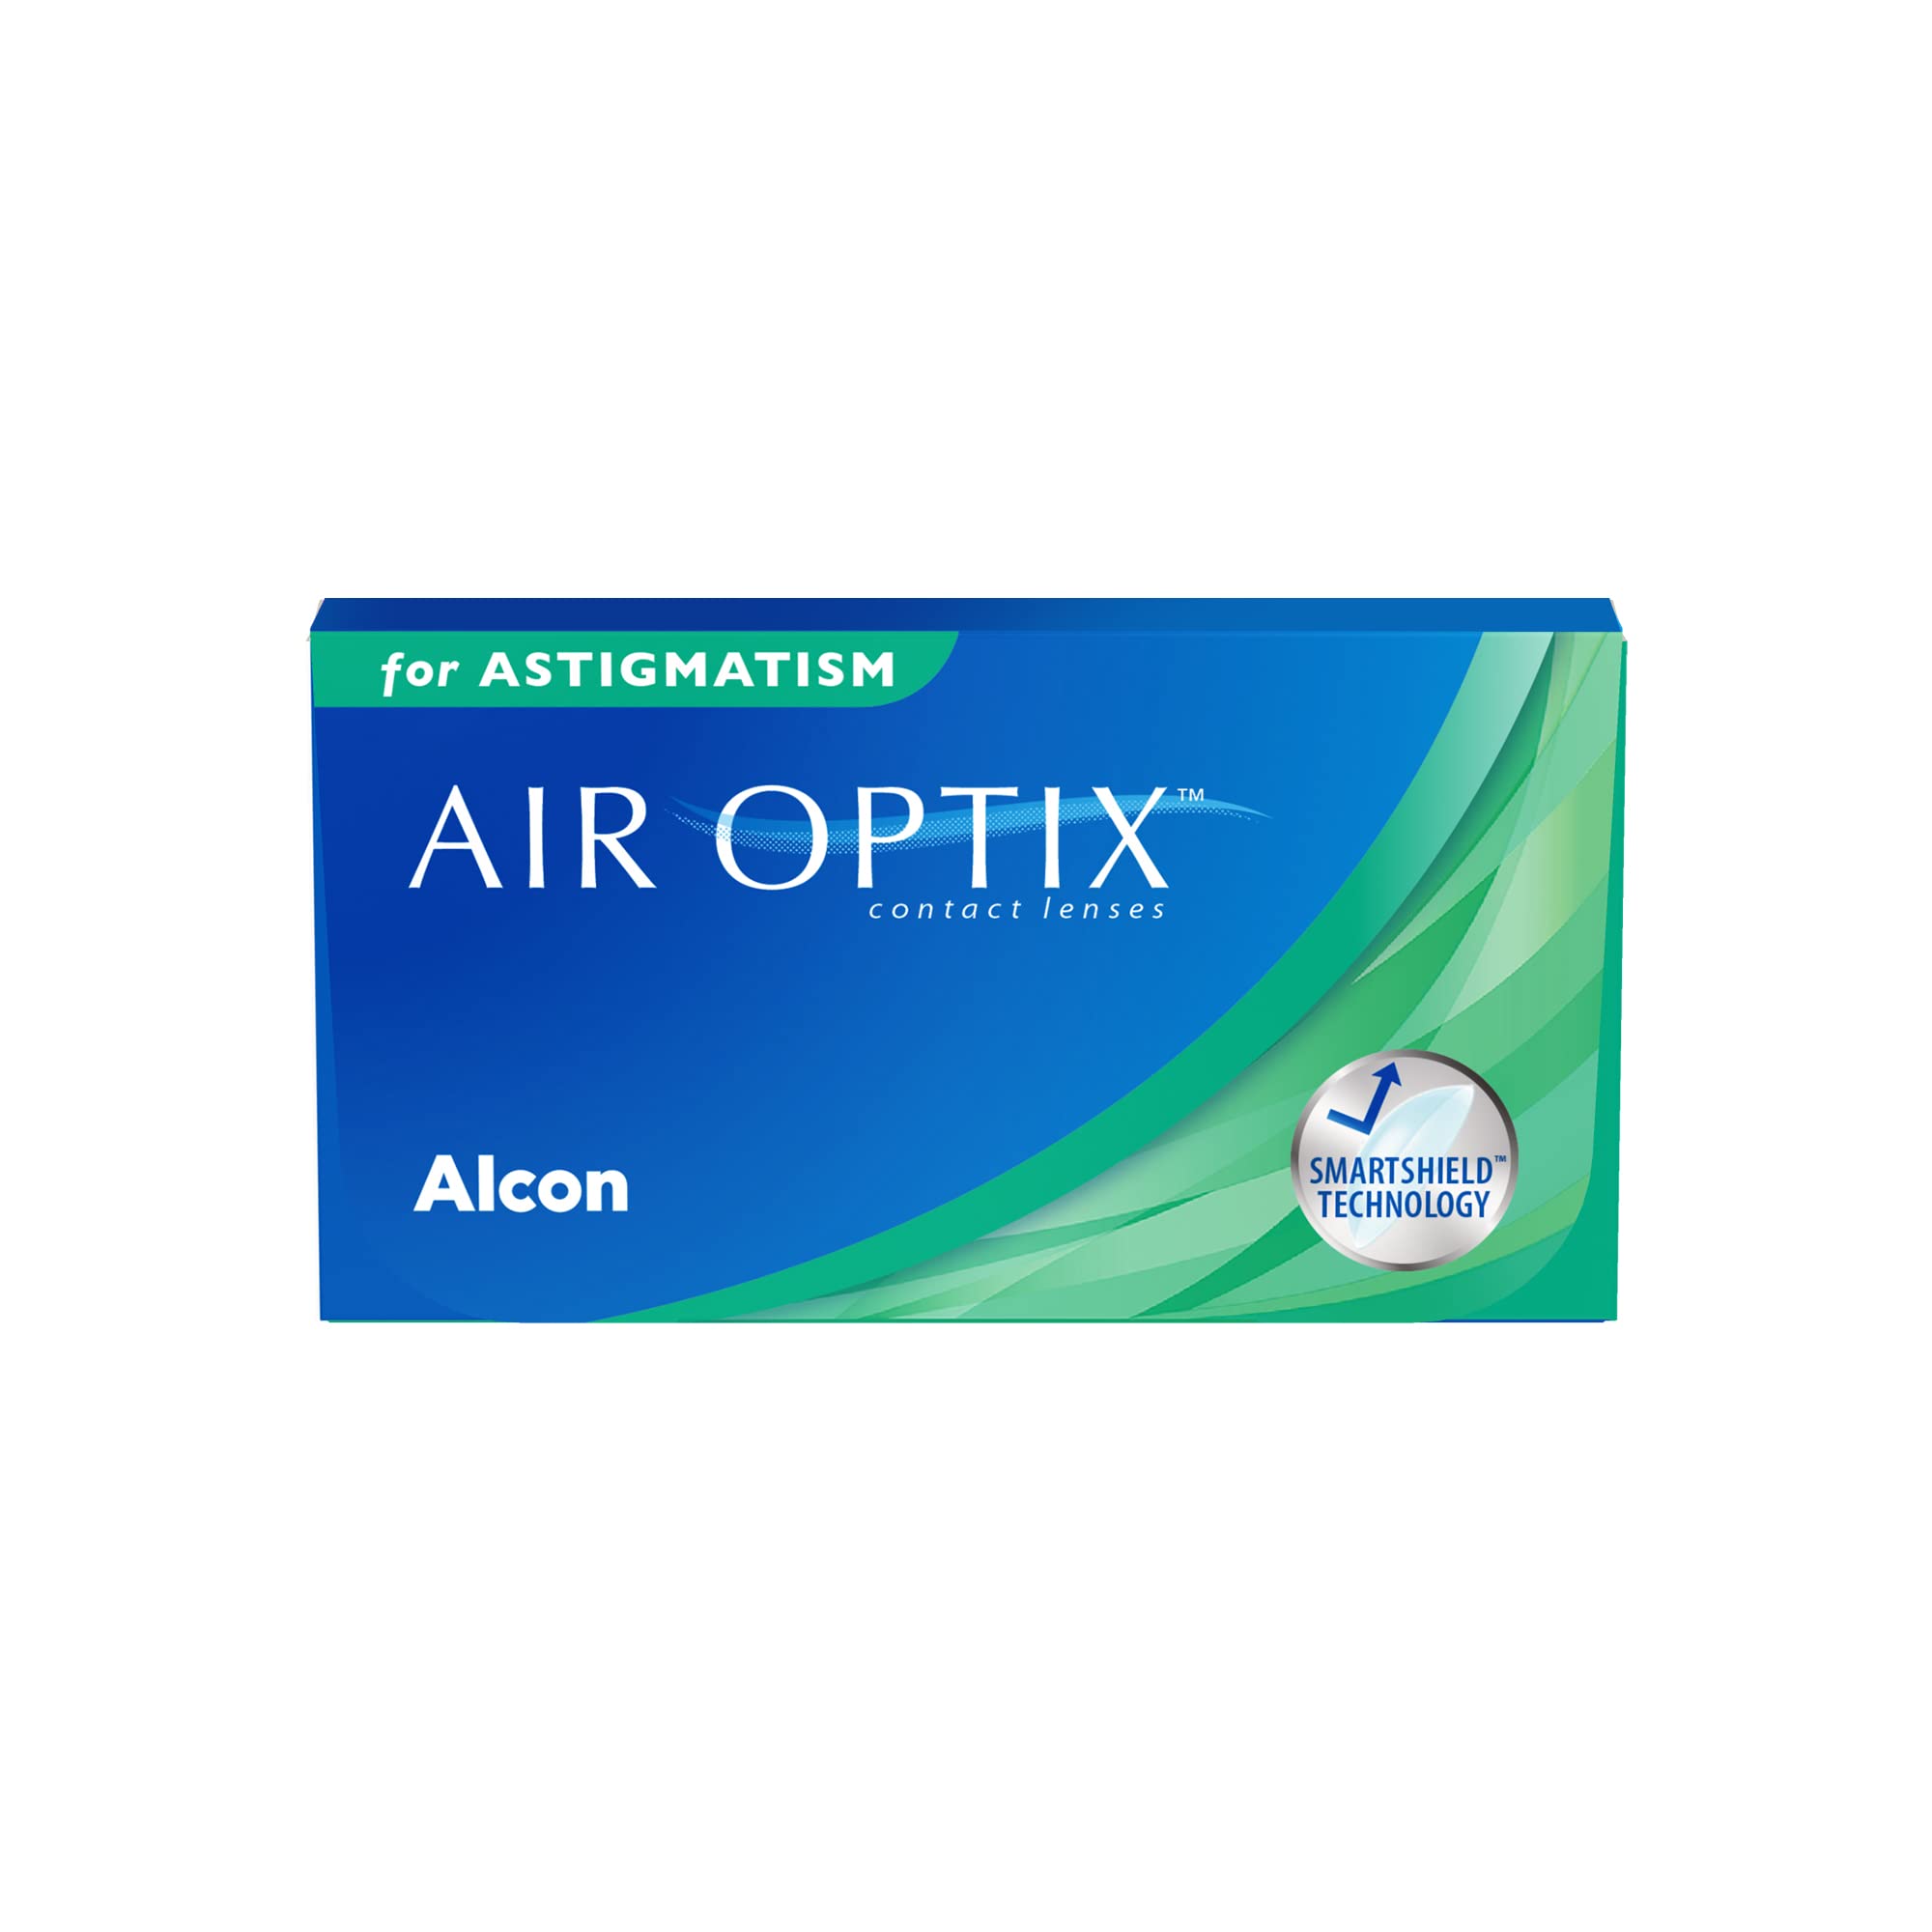 Air Optix for Astigmatism Monatslinsen weich, 6 Stück, BC 8.7 mm, DIA 14.5 mm, CYL -1.75, ACHSE 90, + 5.5 Dioptrien